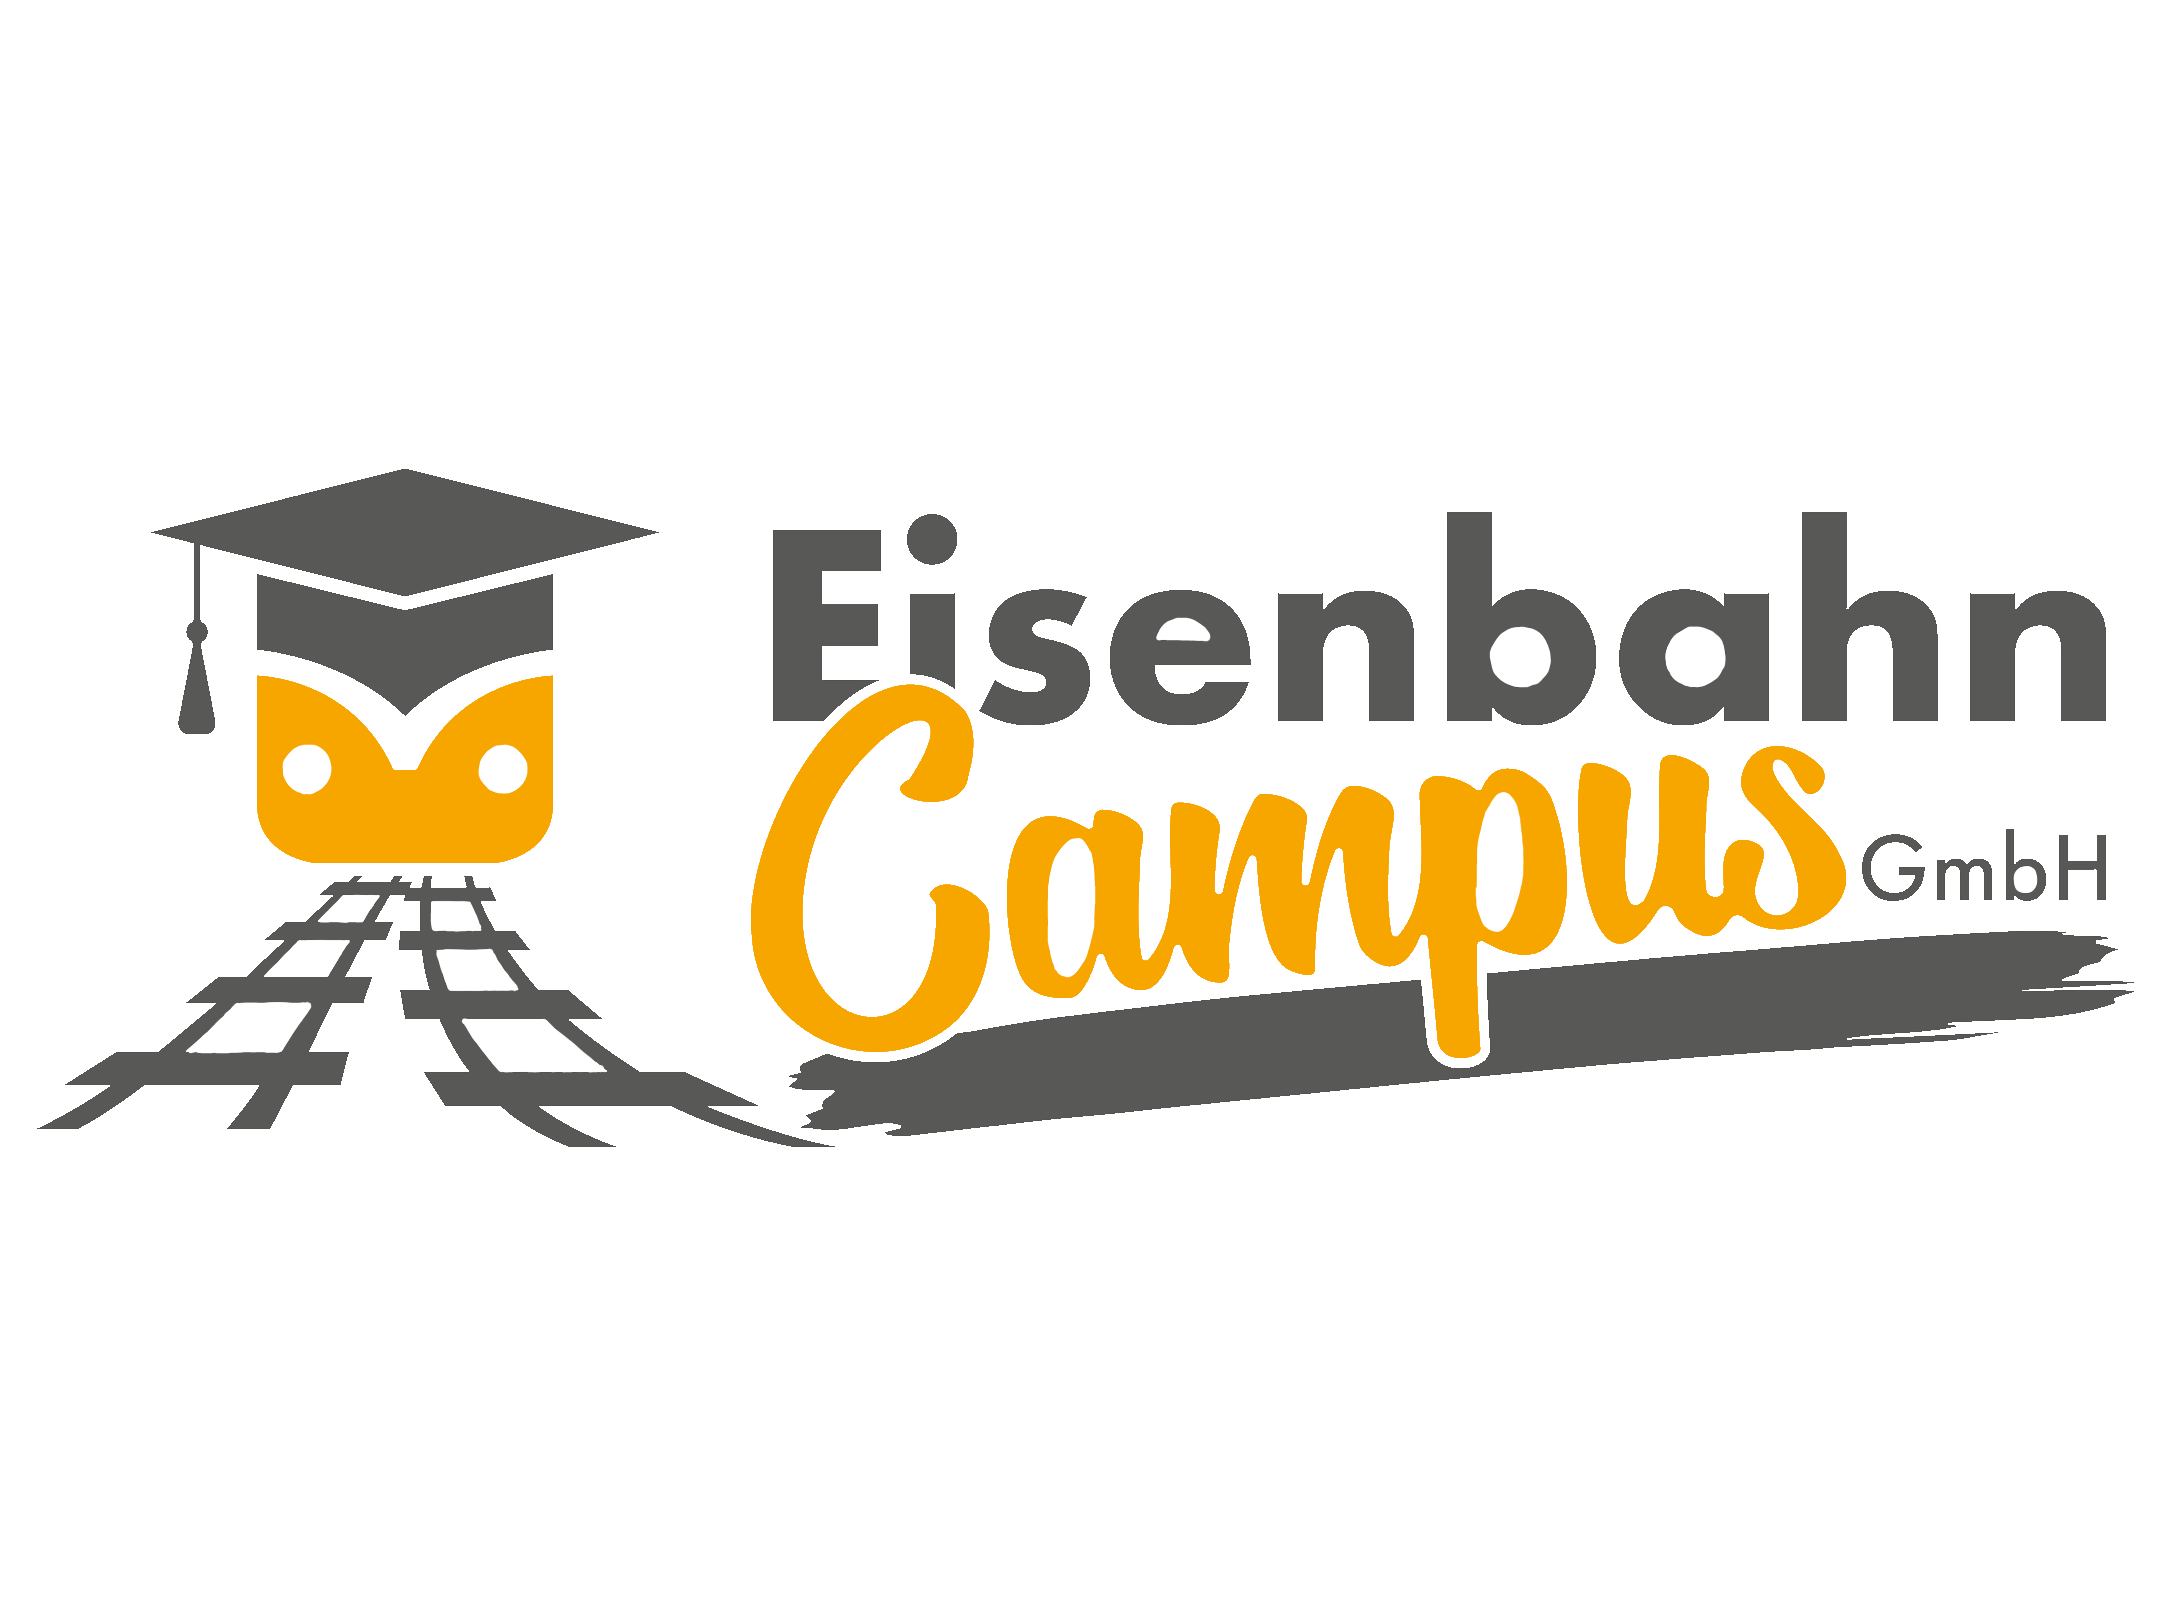 EC Eisenbahn Campus GmbH